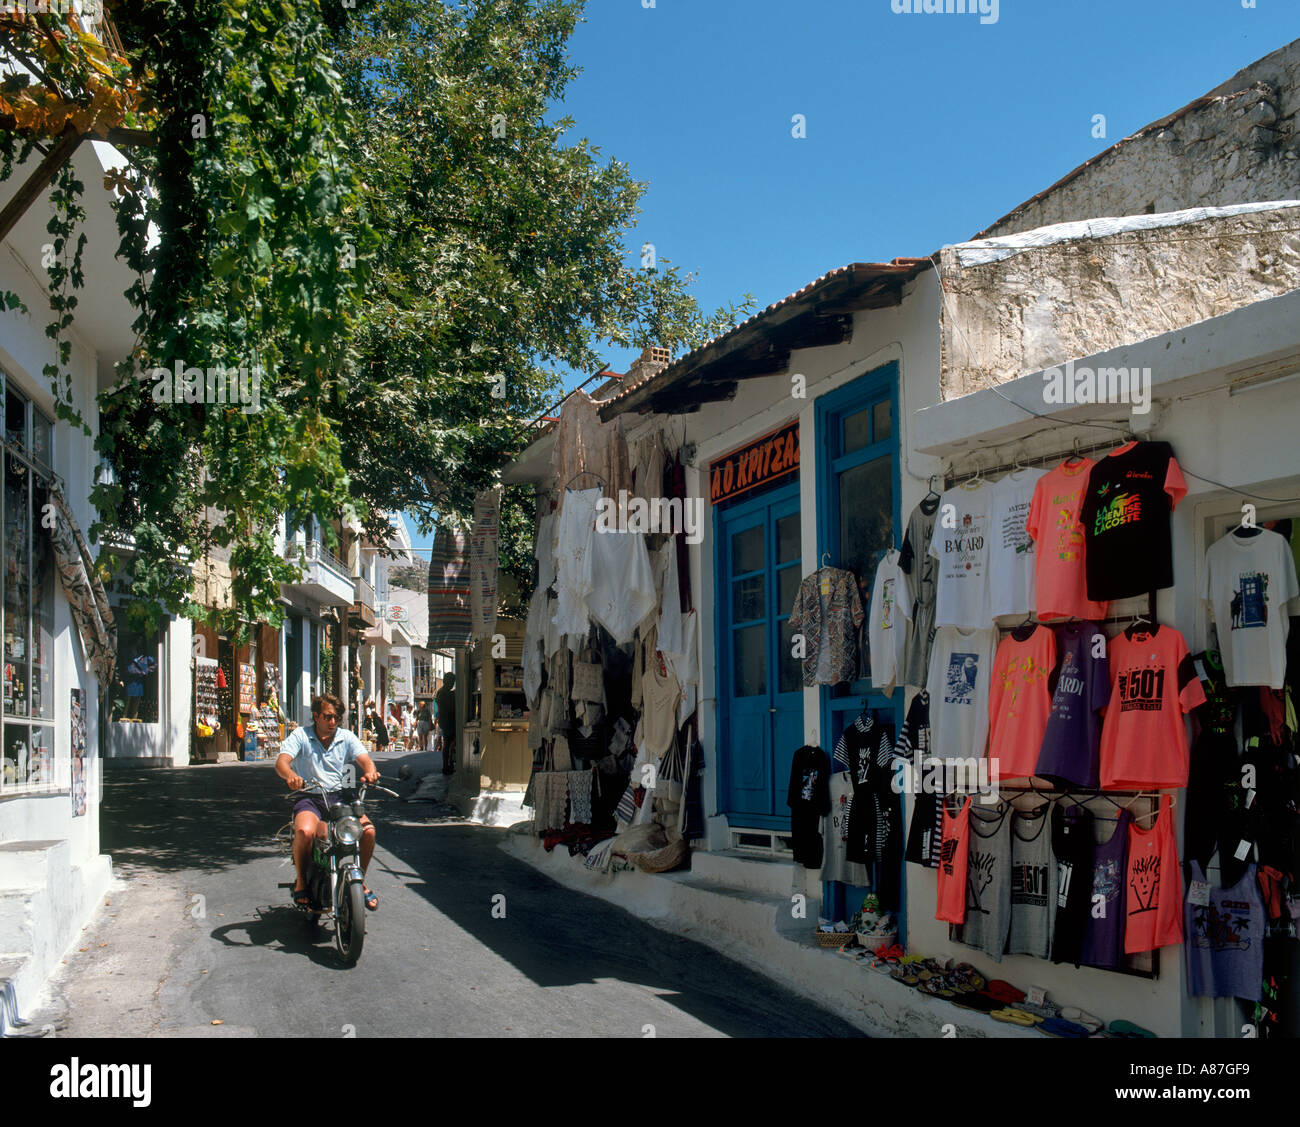 Greece crete souvenir hi-res stock photography and images - Alamy